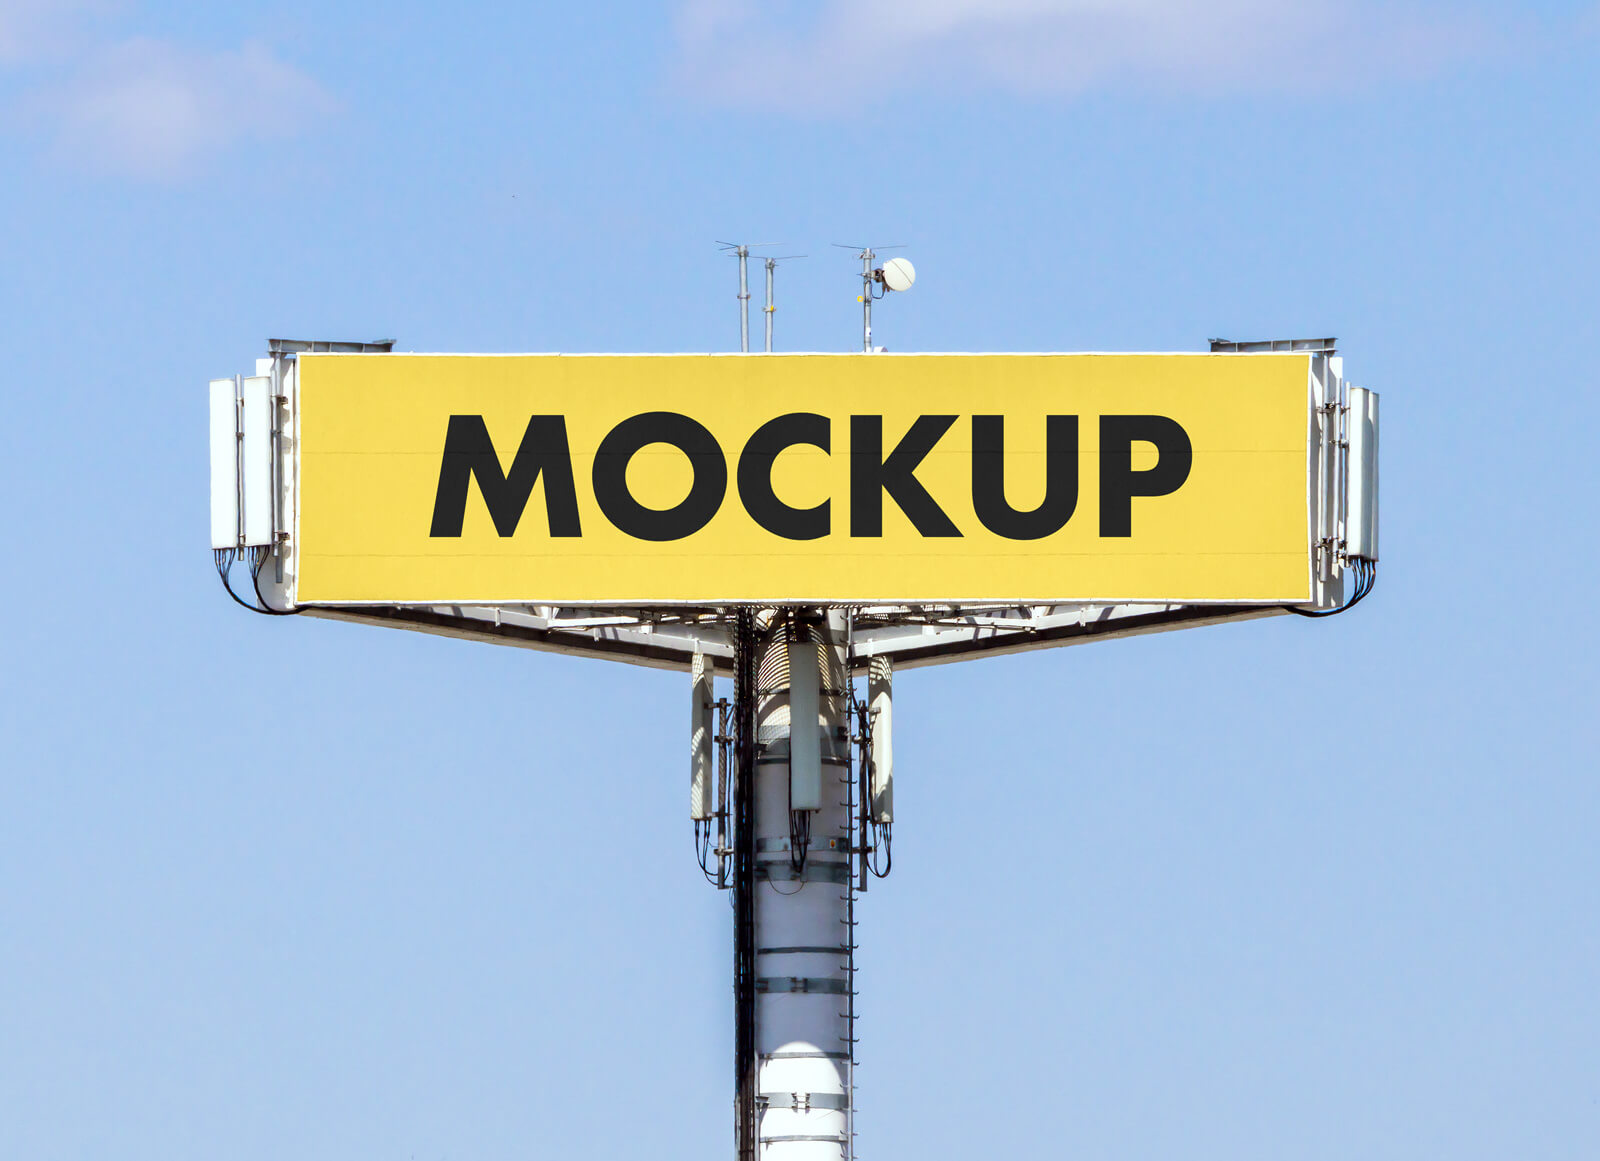 Free-Telecom-Tower-Highway-Billboard-Mockup-PSD